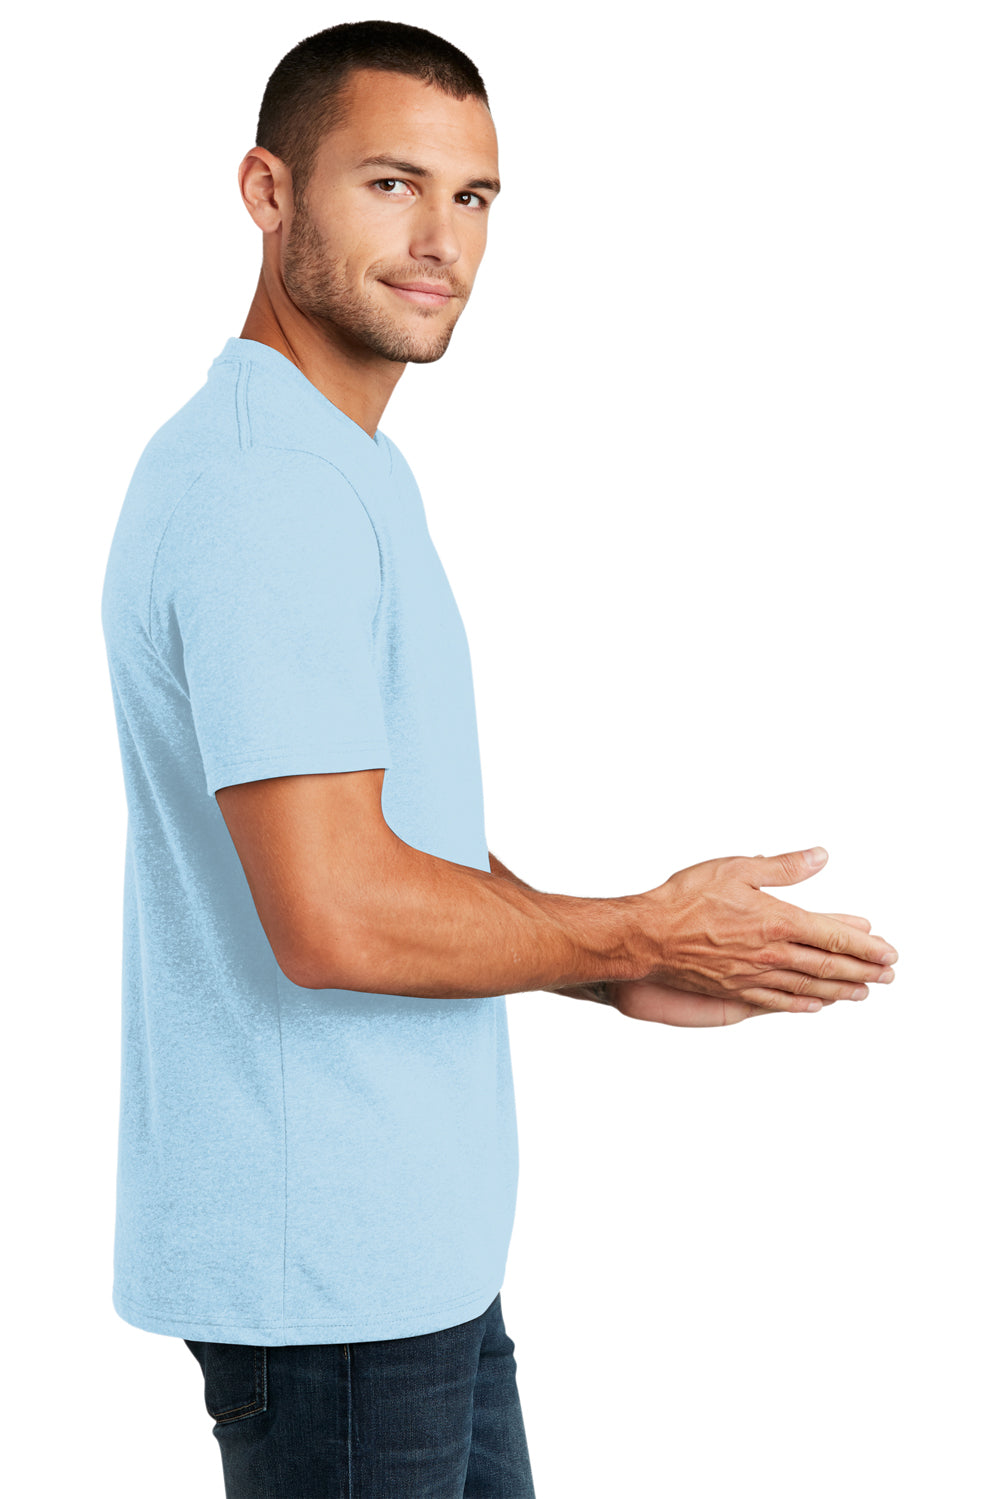 District Mens Re-Tee Short Sleeve Crewneck T-Shirt Crystal Blue Side